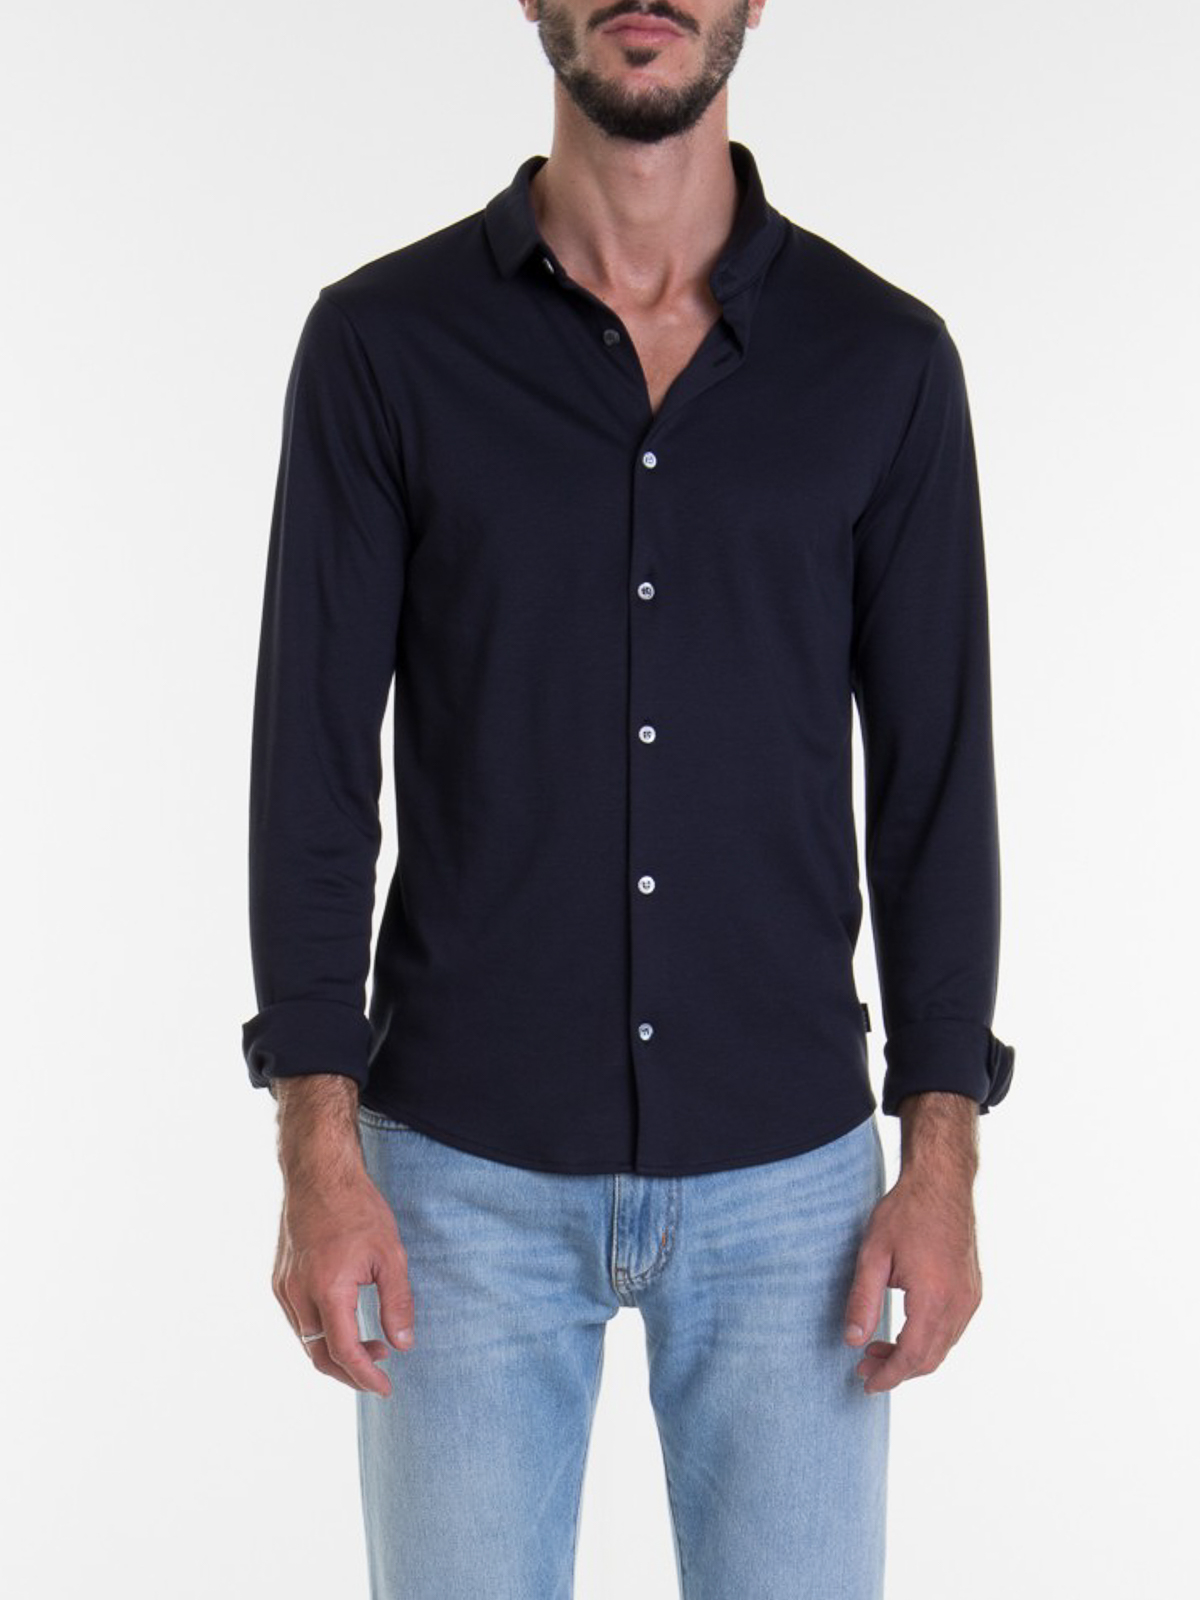 Bloesem Buitenlander Gewaad Hemden Emporio Armani - Hemd - Blau - 8N1CH61JPRZ0922 | iKRIX Shop online